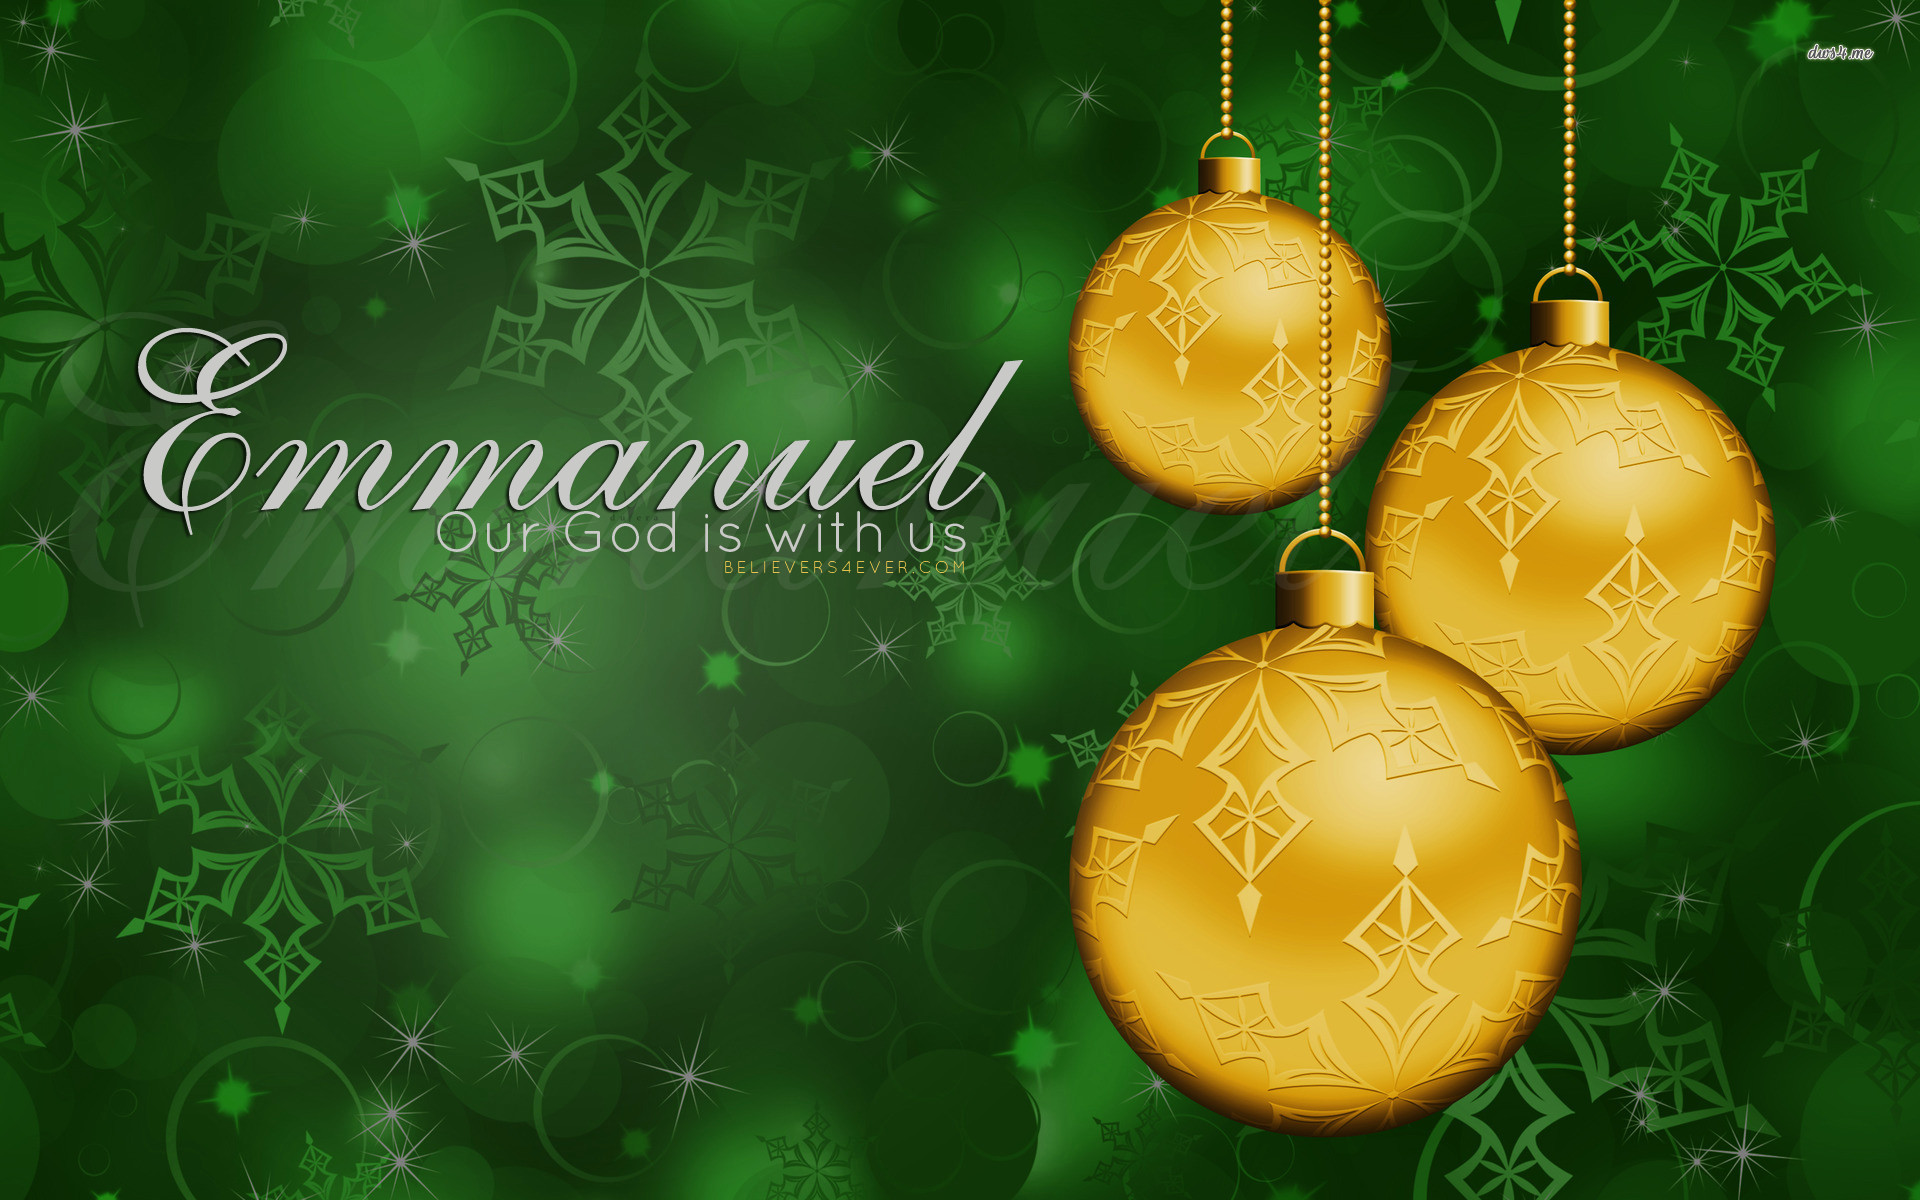 Emmanuel Christian Christmas Desktop wallpaper